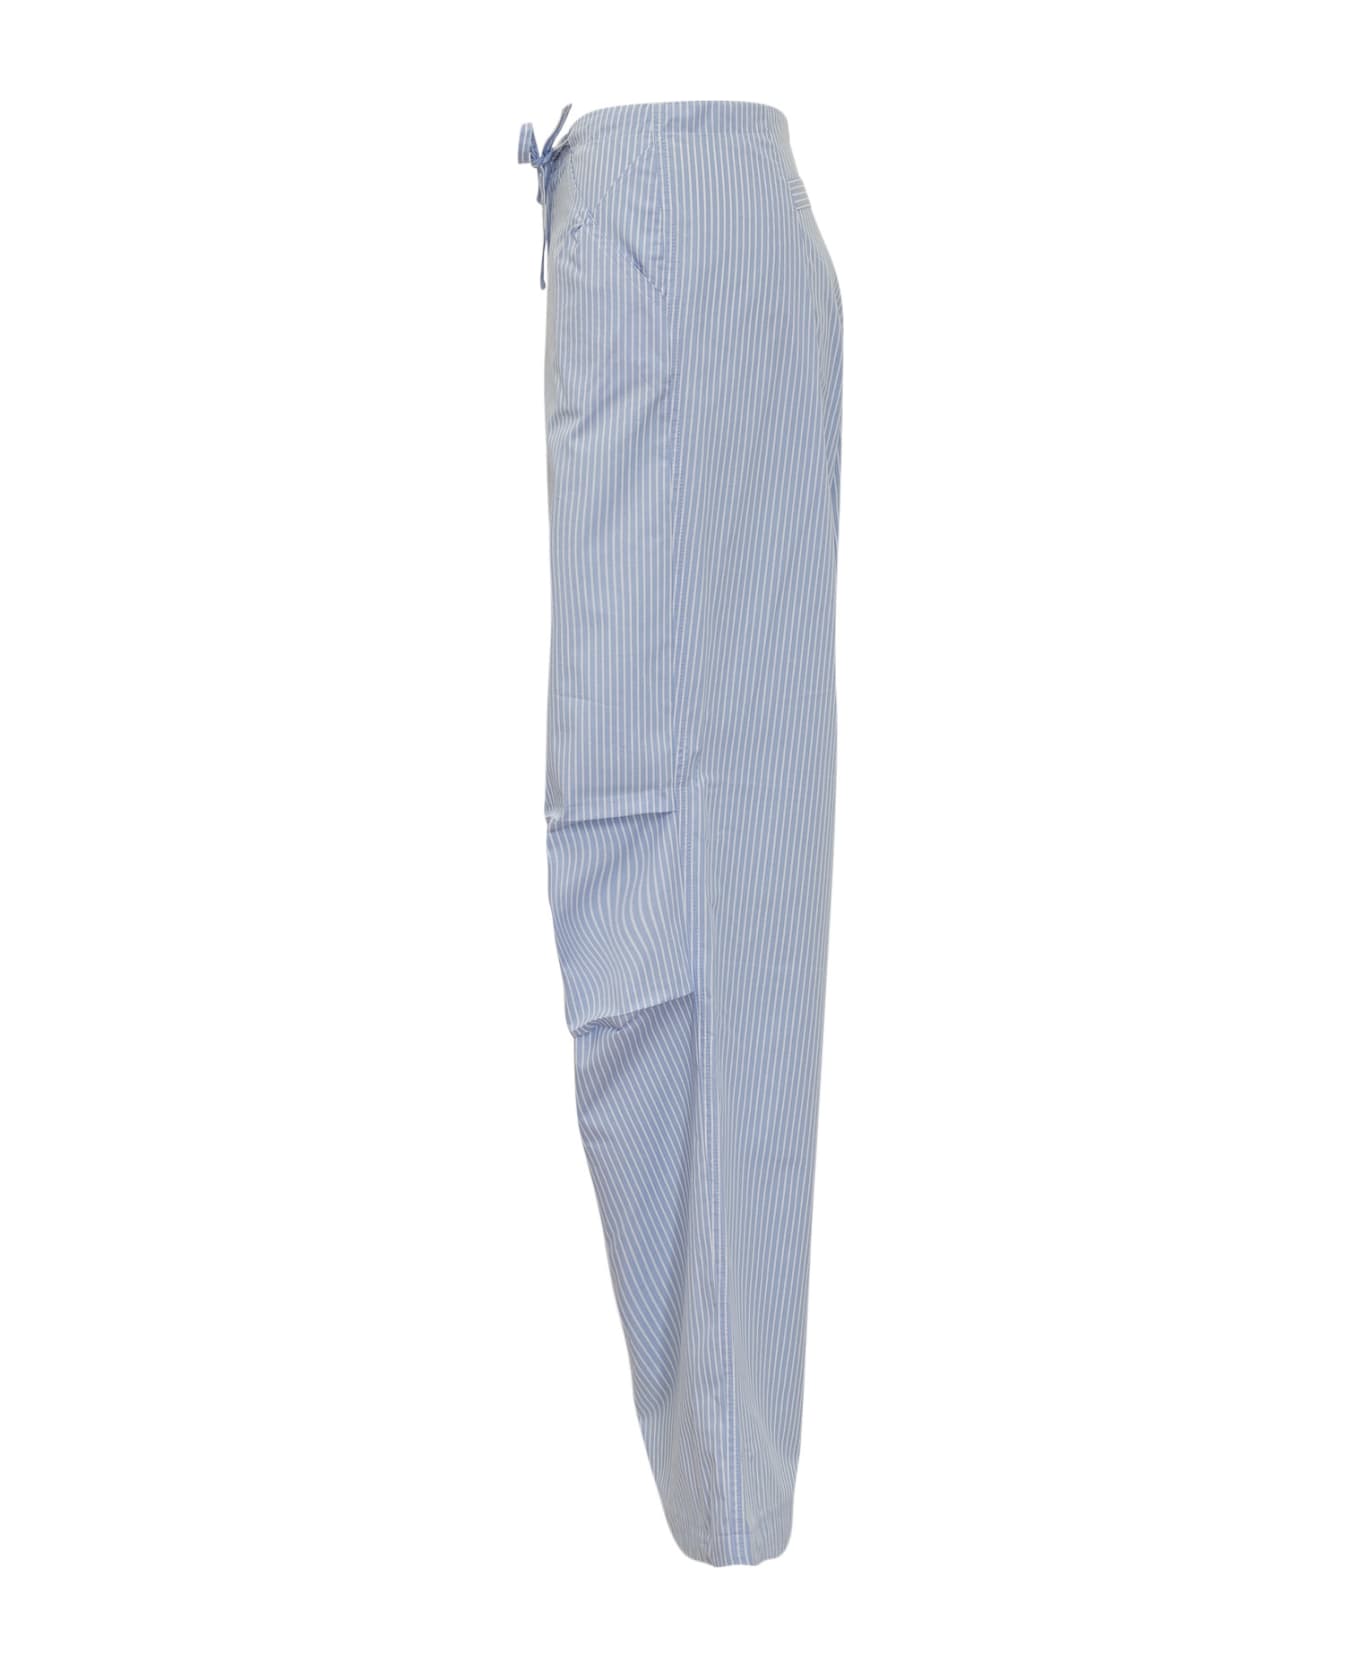 DARKPARK Daisy Milit Trousers - LIGHT BLUE/WHITE